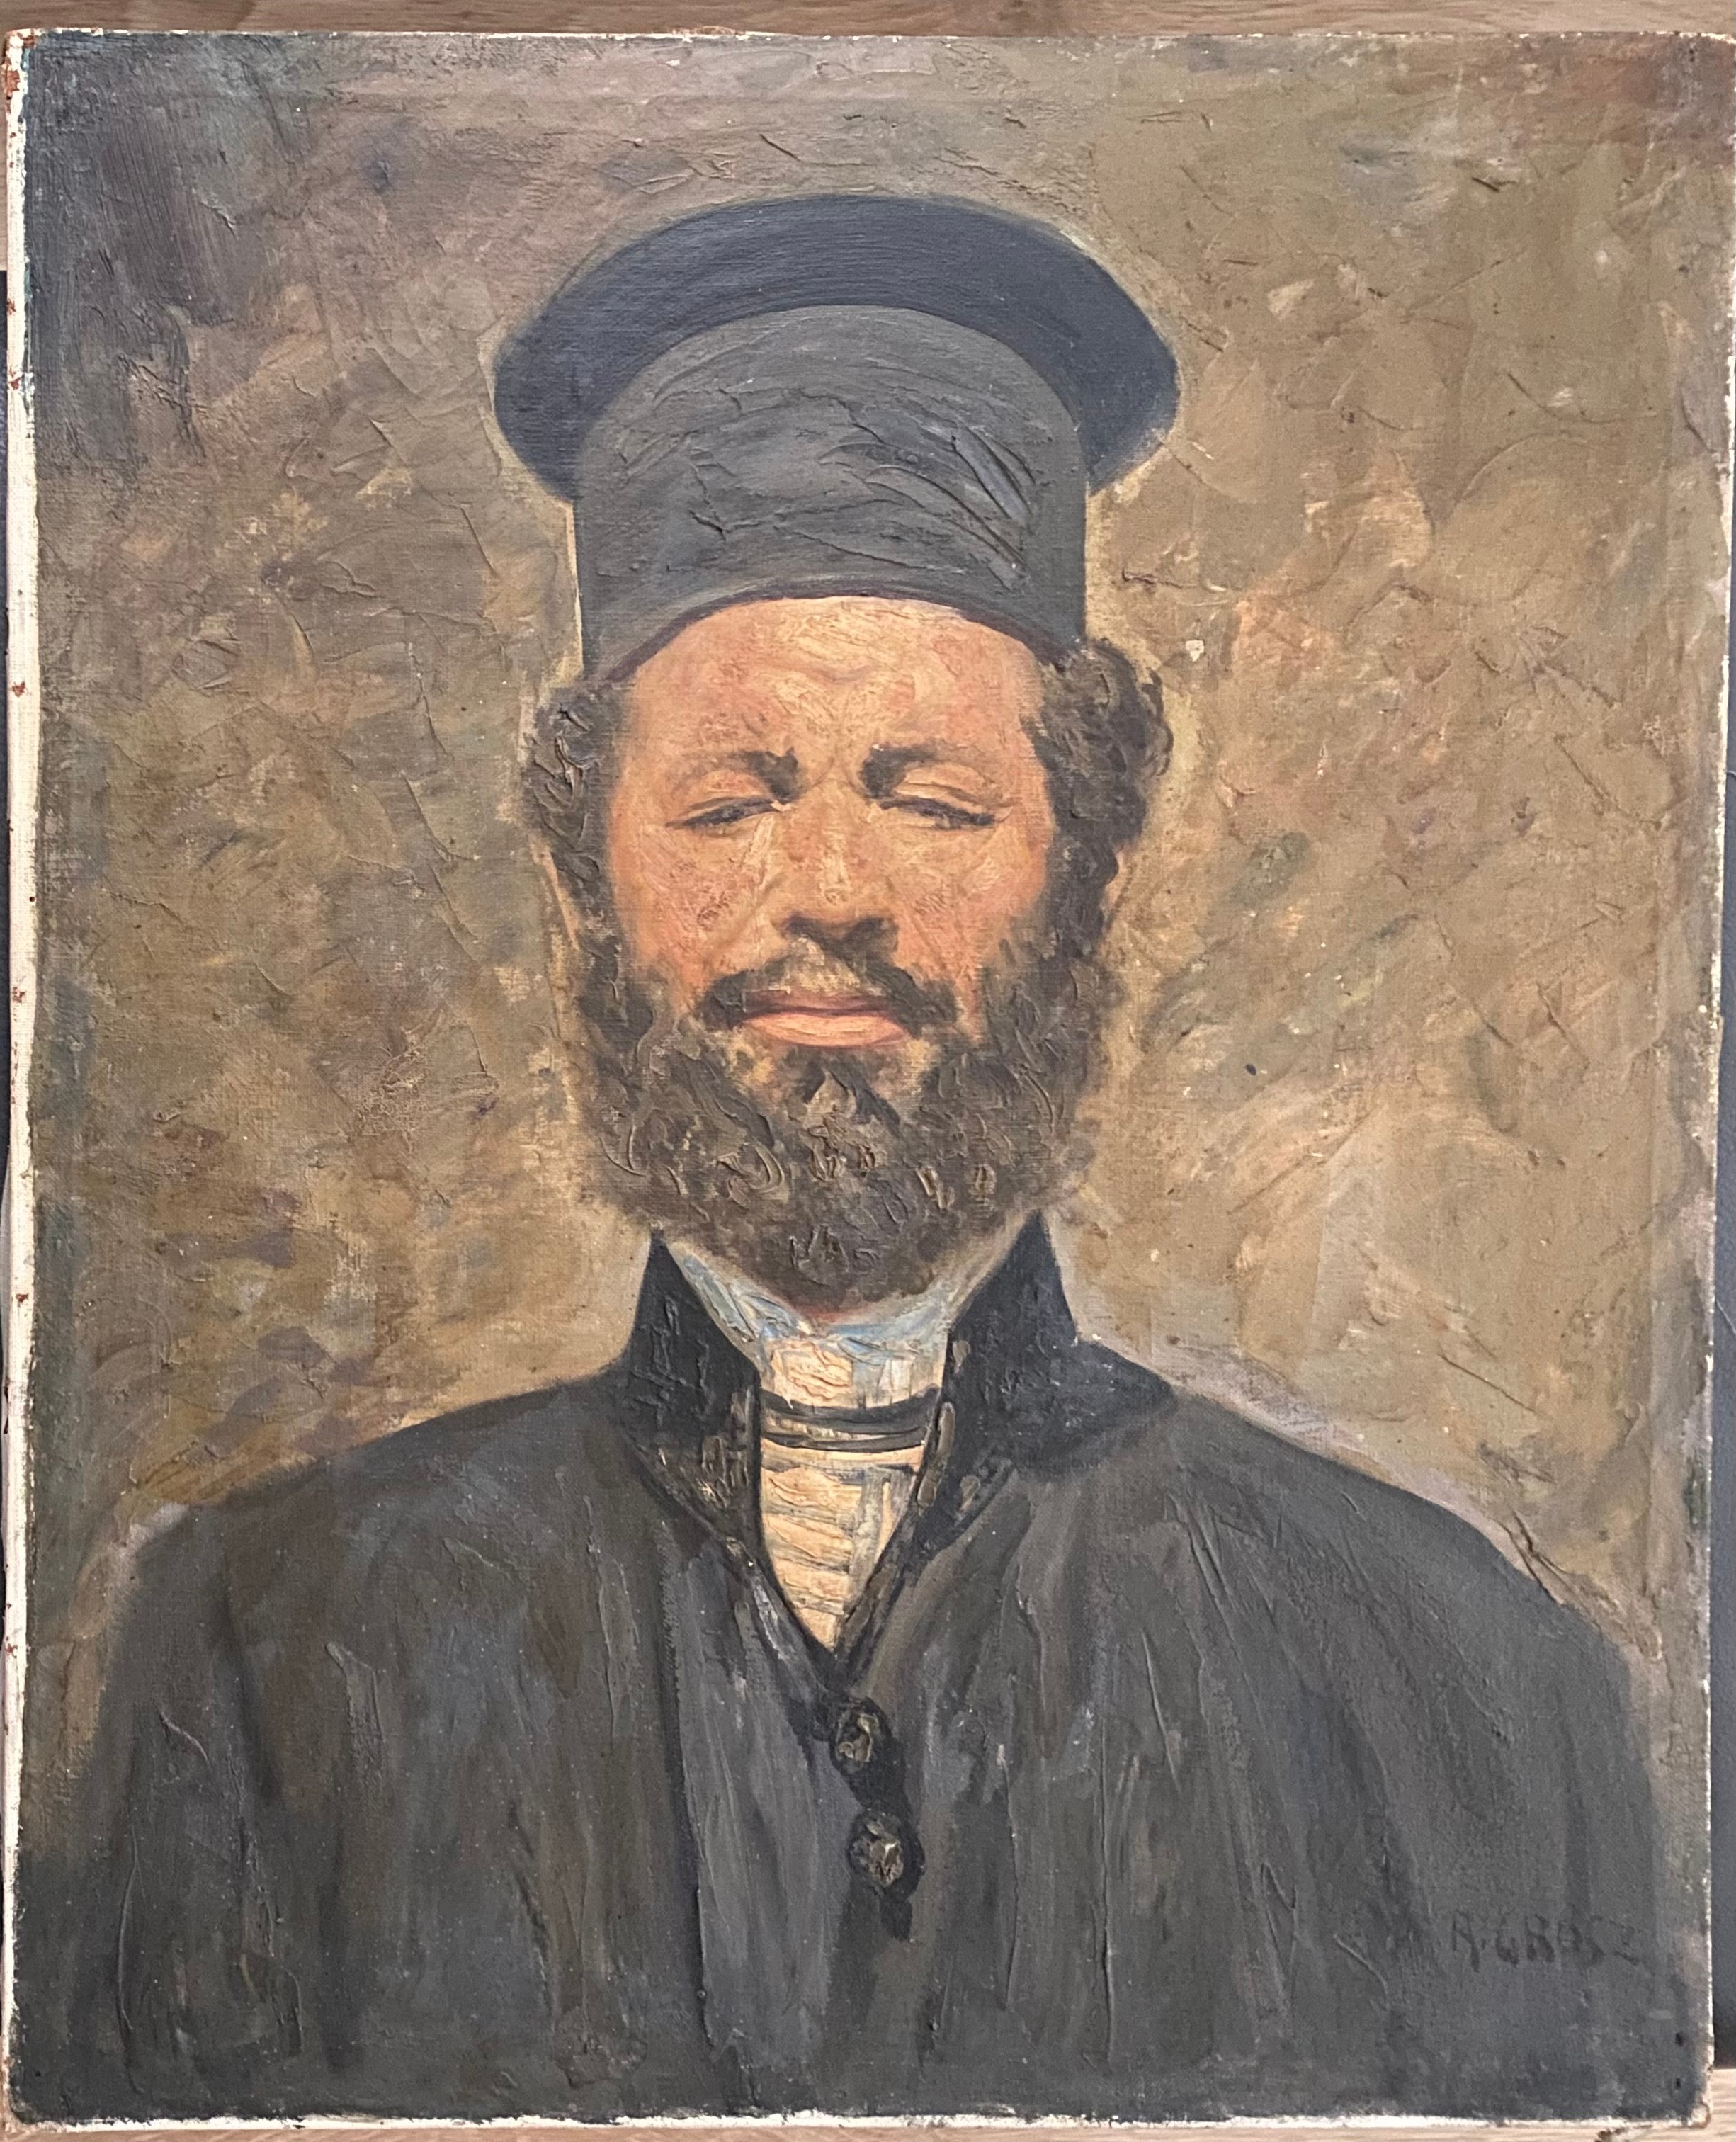 August Ignatz Grosz (1847-1917). Austrian. Oil on canvas. “A Greek Orthodox Priest in Jerusalem”.